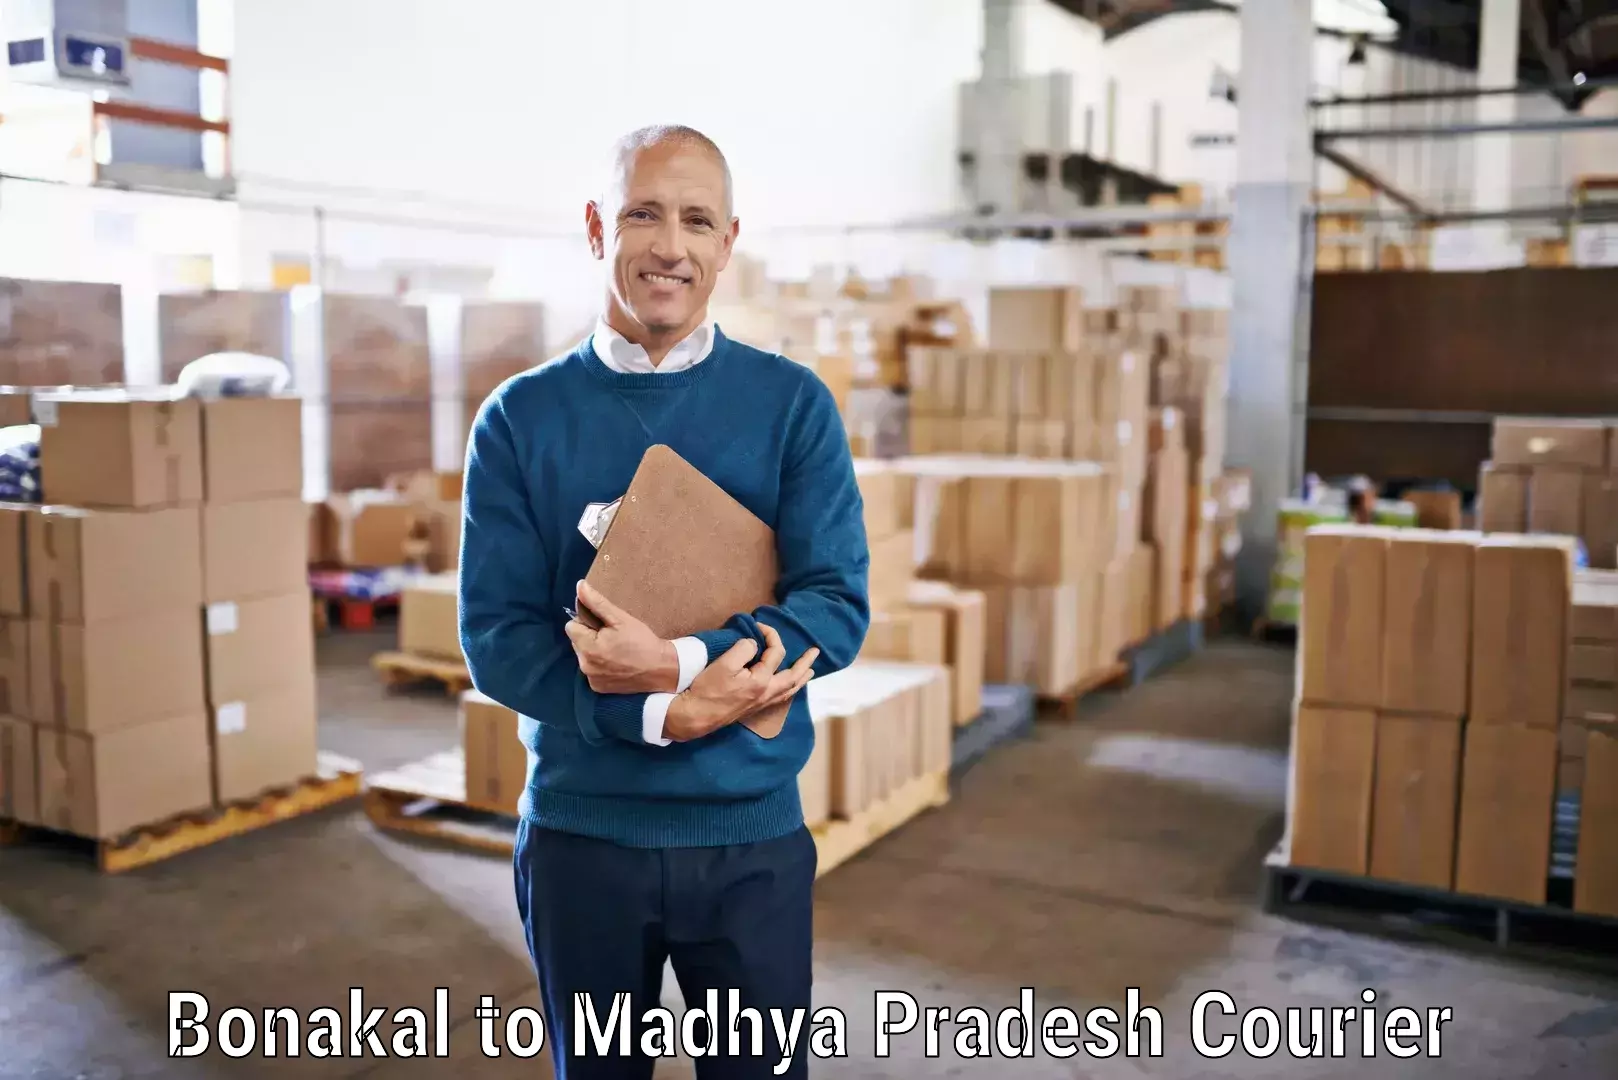 Express logistics providers Bonakal to Mandideep